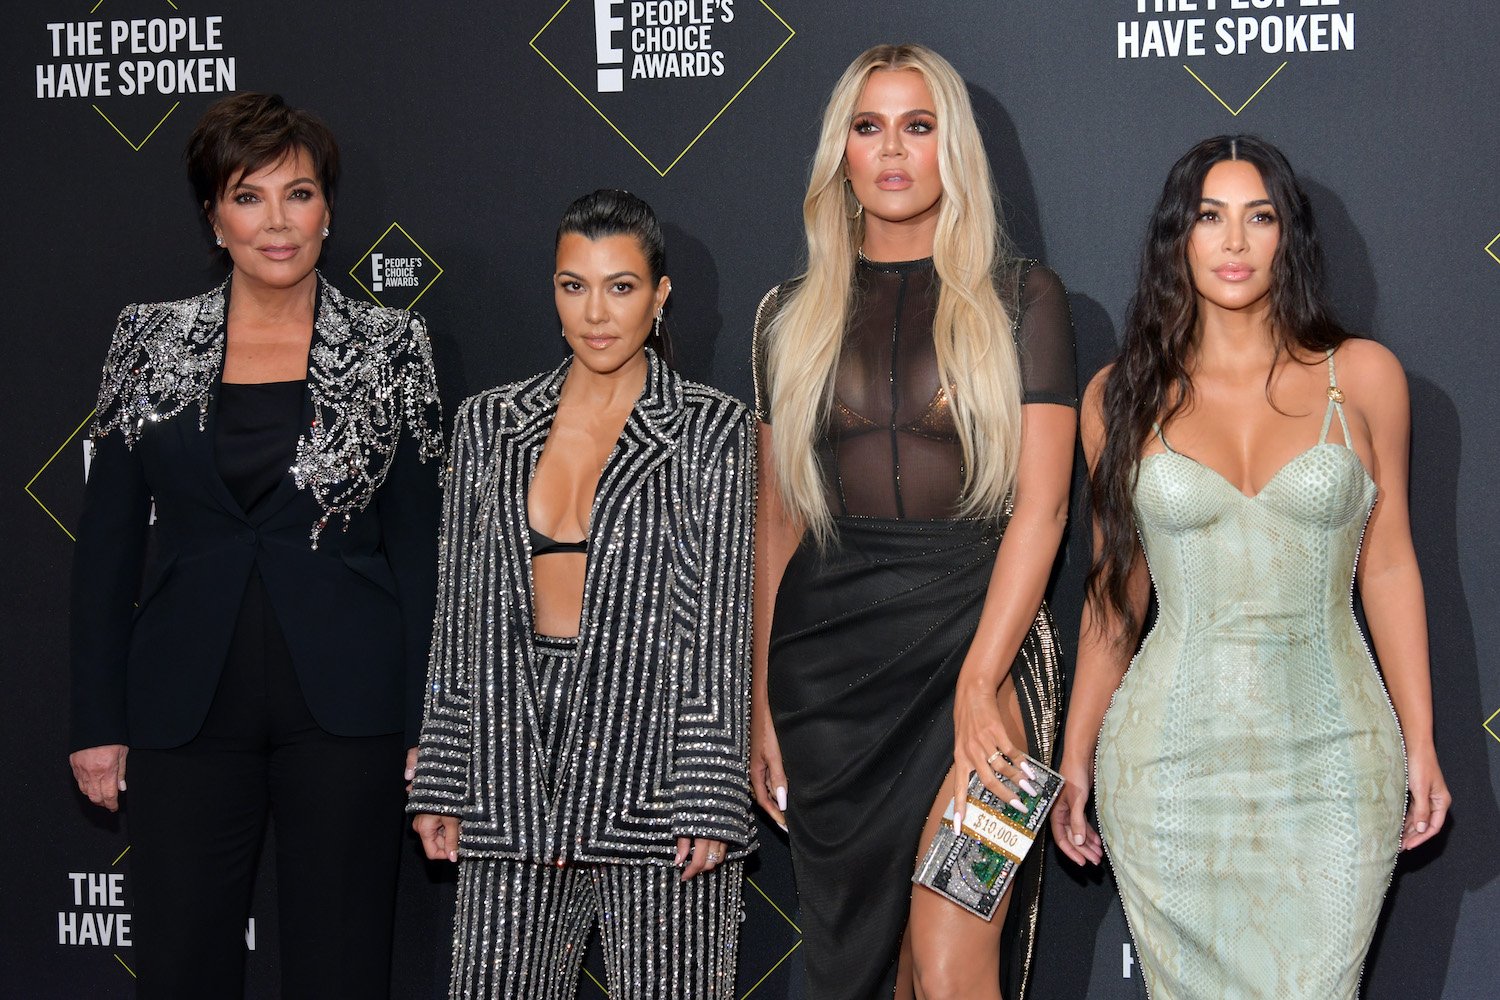 Kris Jenner, Kourtney Kardashian, Khloé Kardashian, and Kim Kardashian attend 2019 E! People's Choice Awards